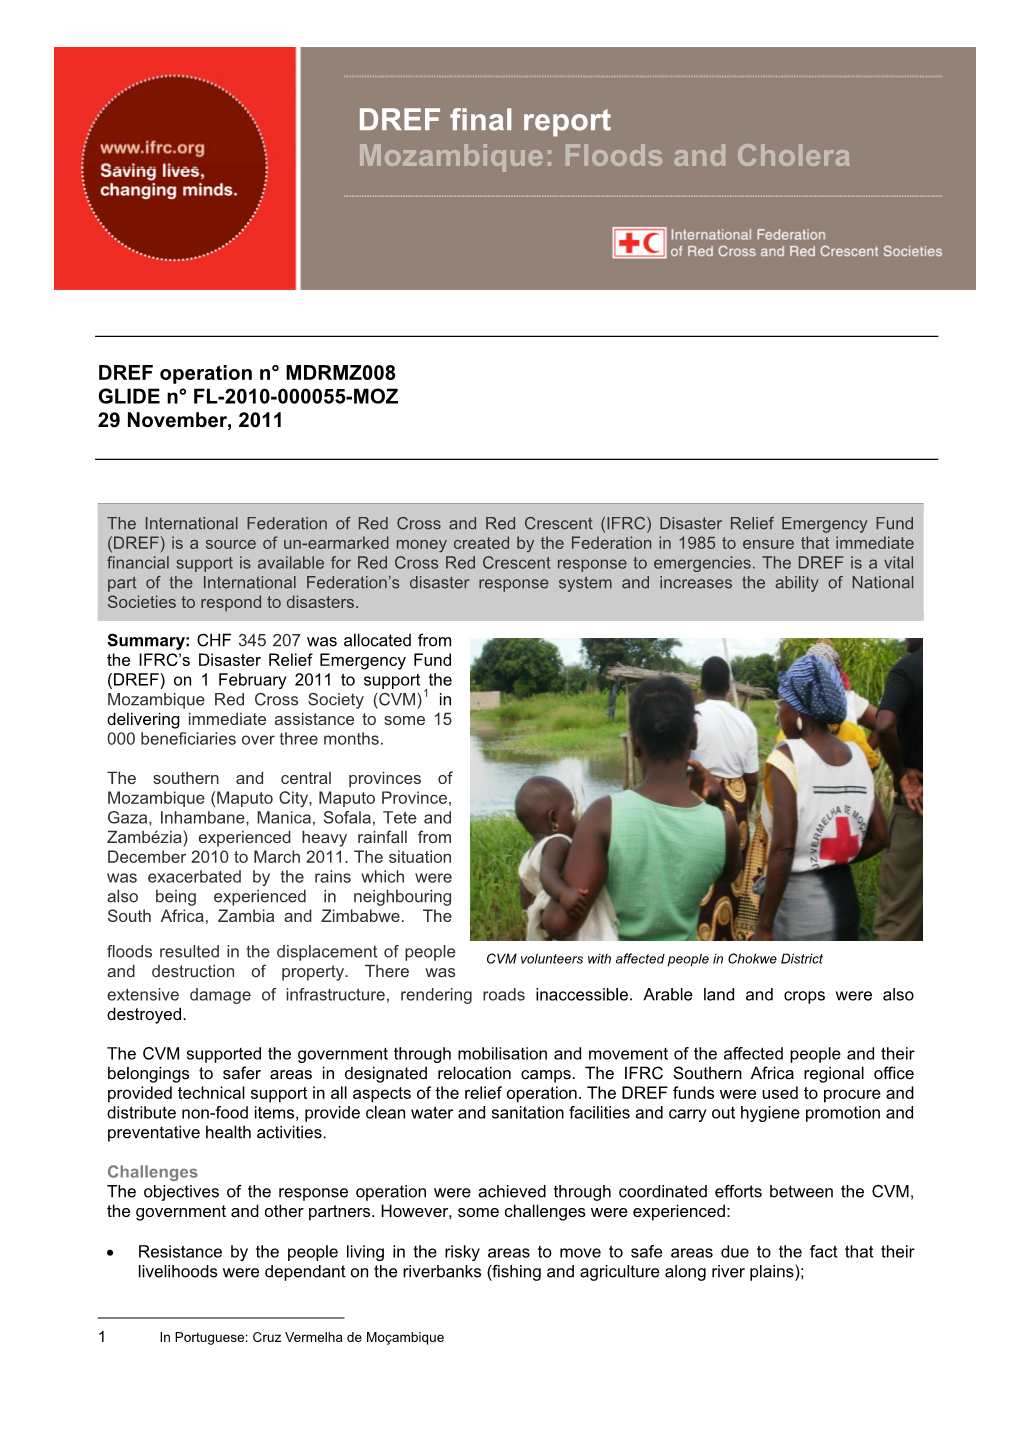 DREF Final Report Mozambique: Floods and Cholera